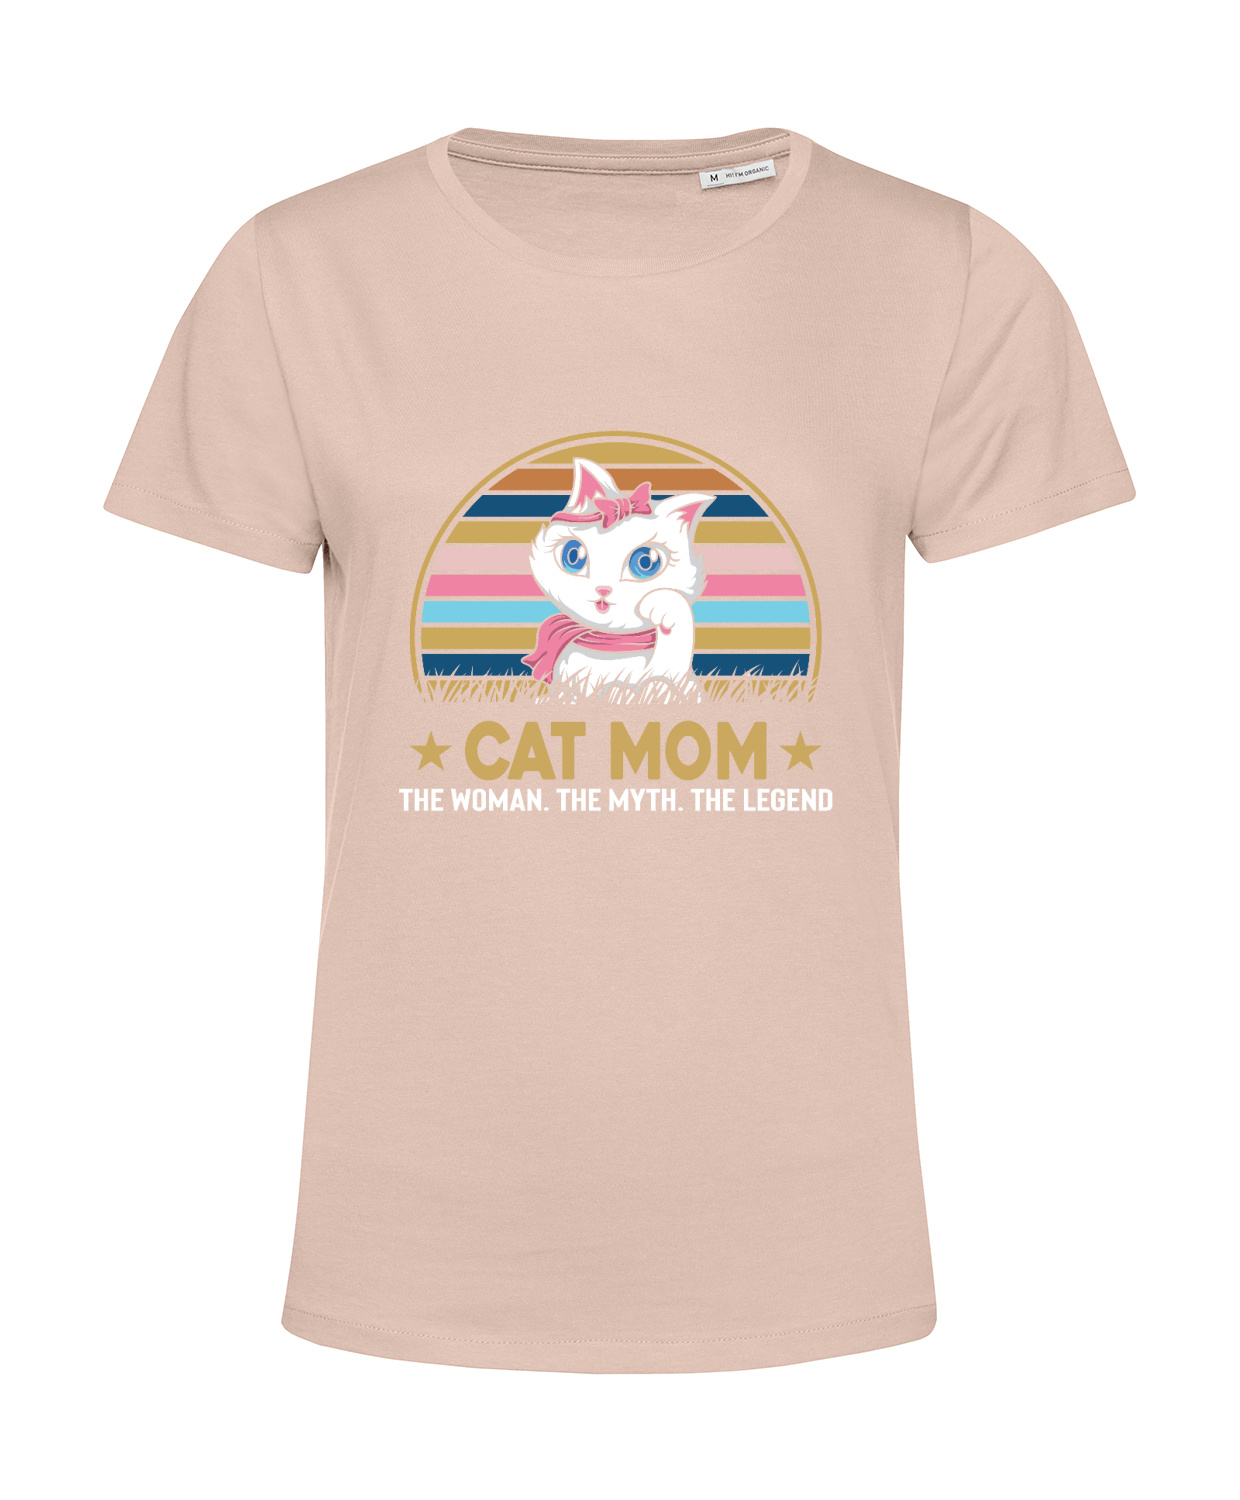 Nachhaltiges T-Shirt Damen Cat Mom - The Woman - The Myth - The Legend